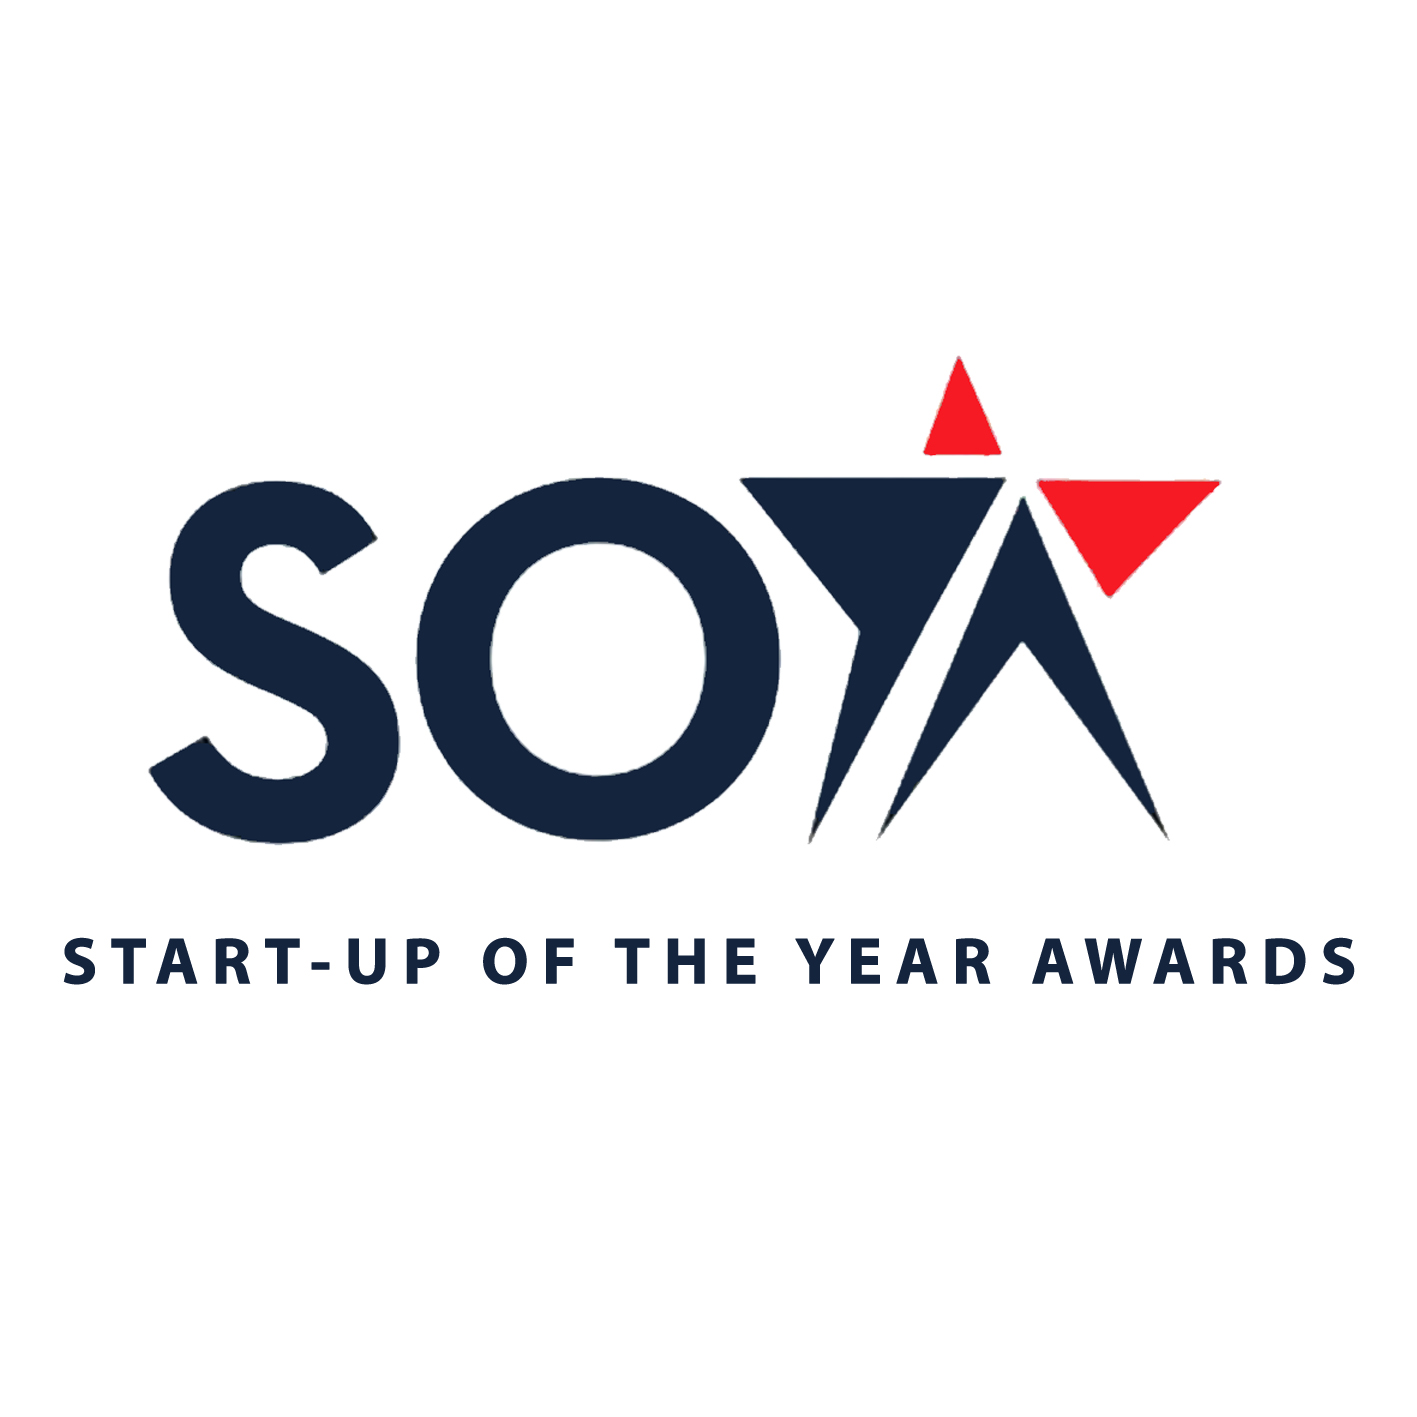 the Blea Nomination at the SOYA Awards